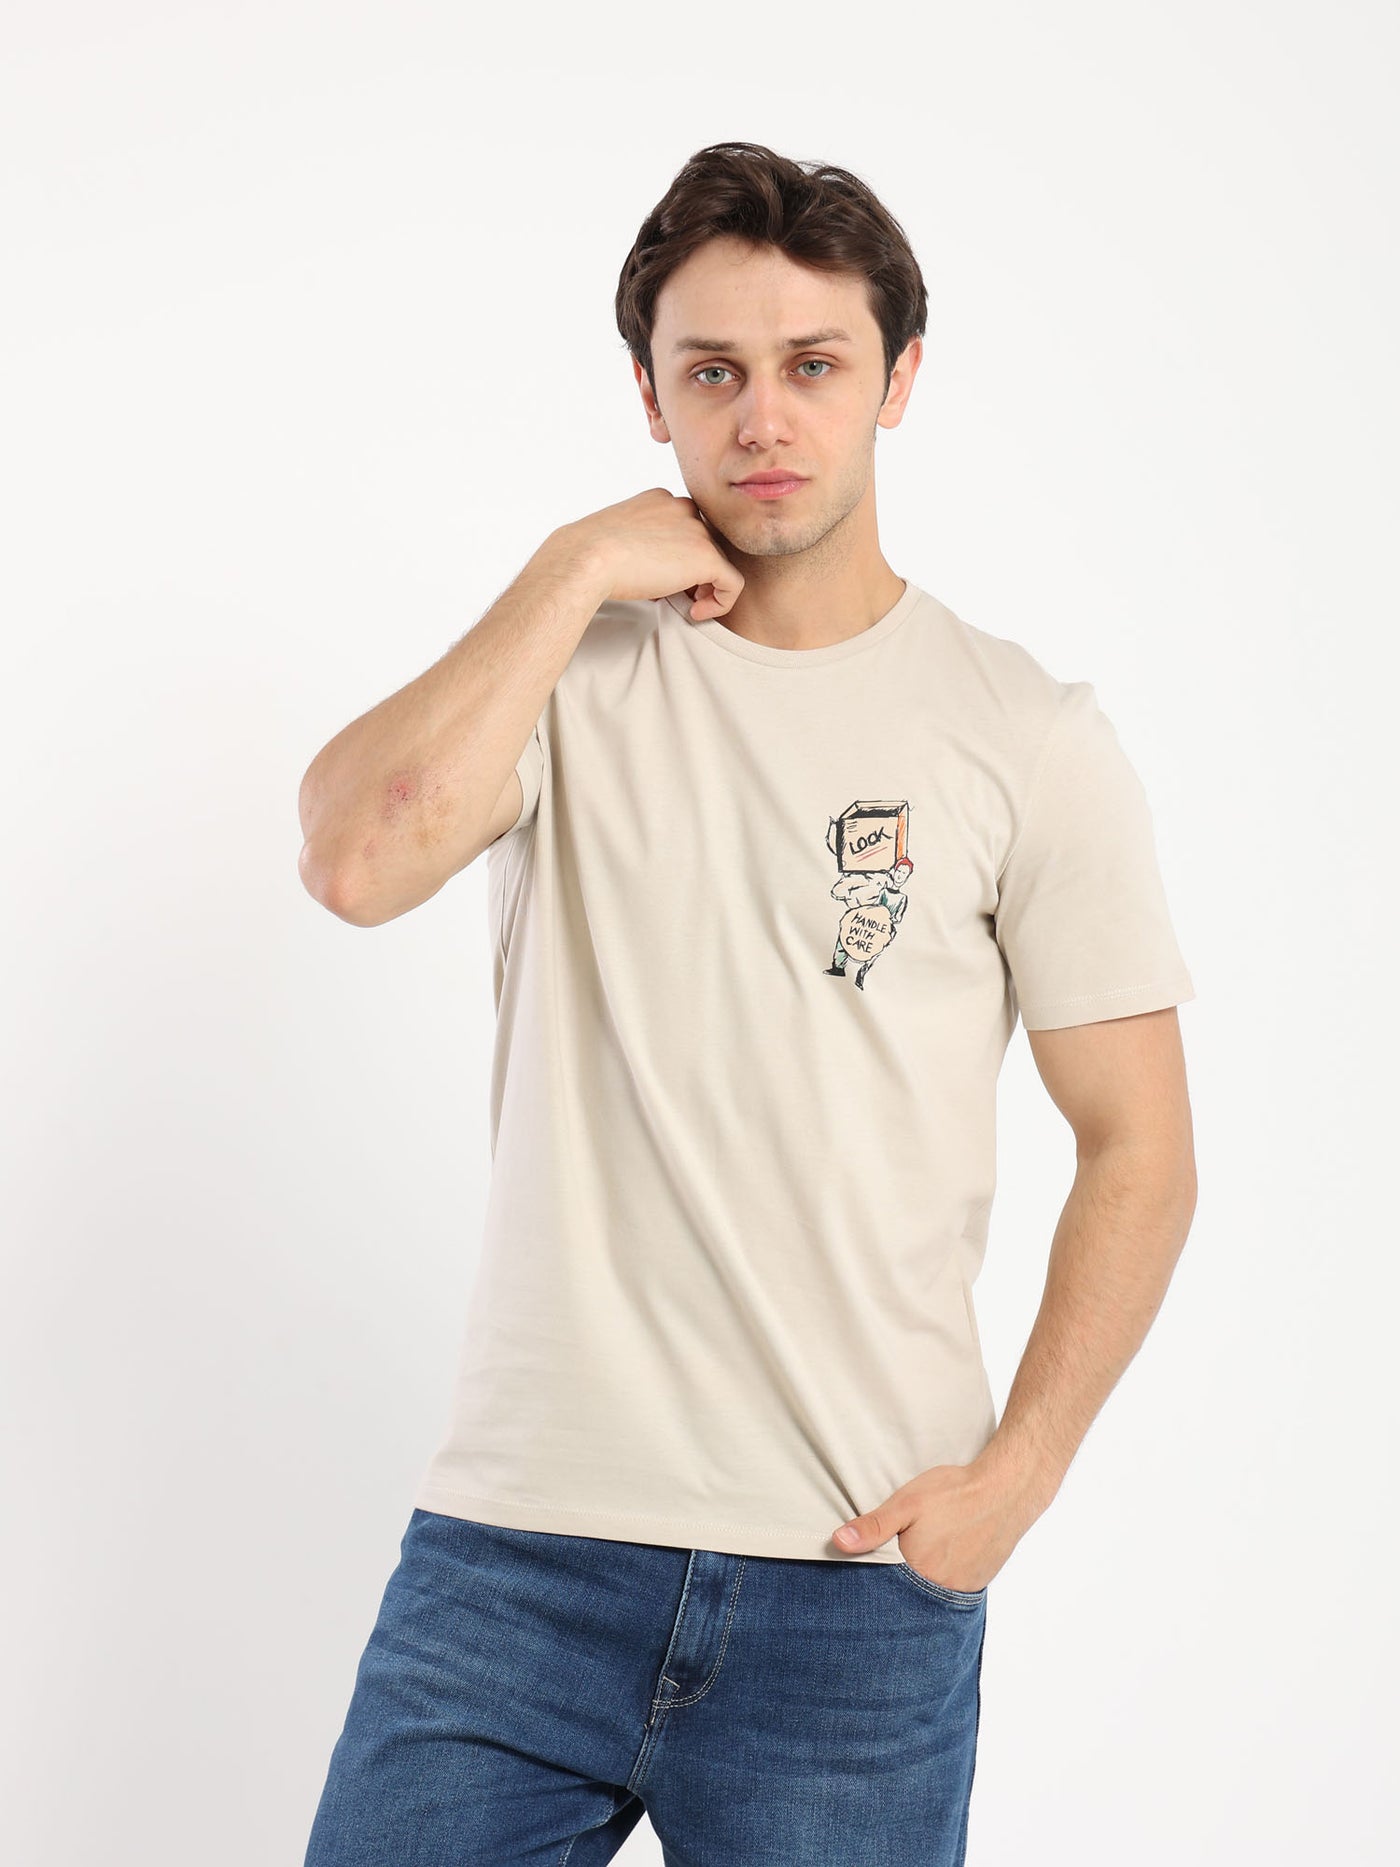 T-Shirt - "Locked" Print - Short Sleeves